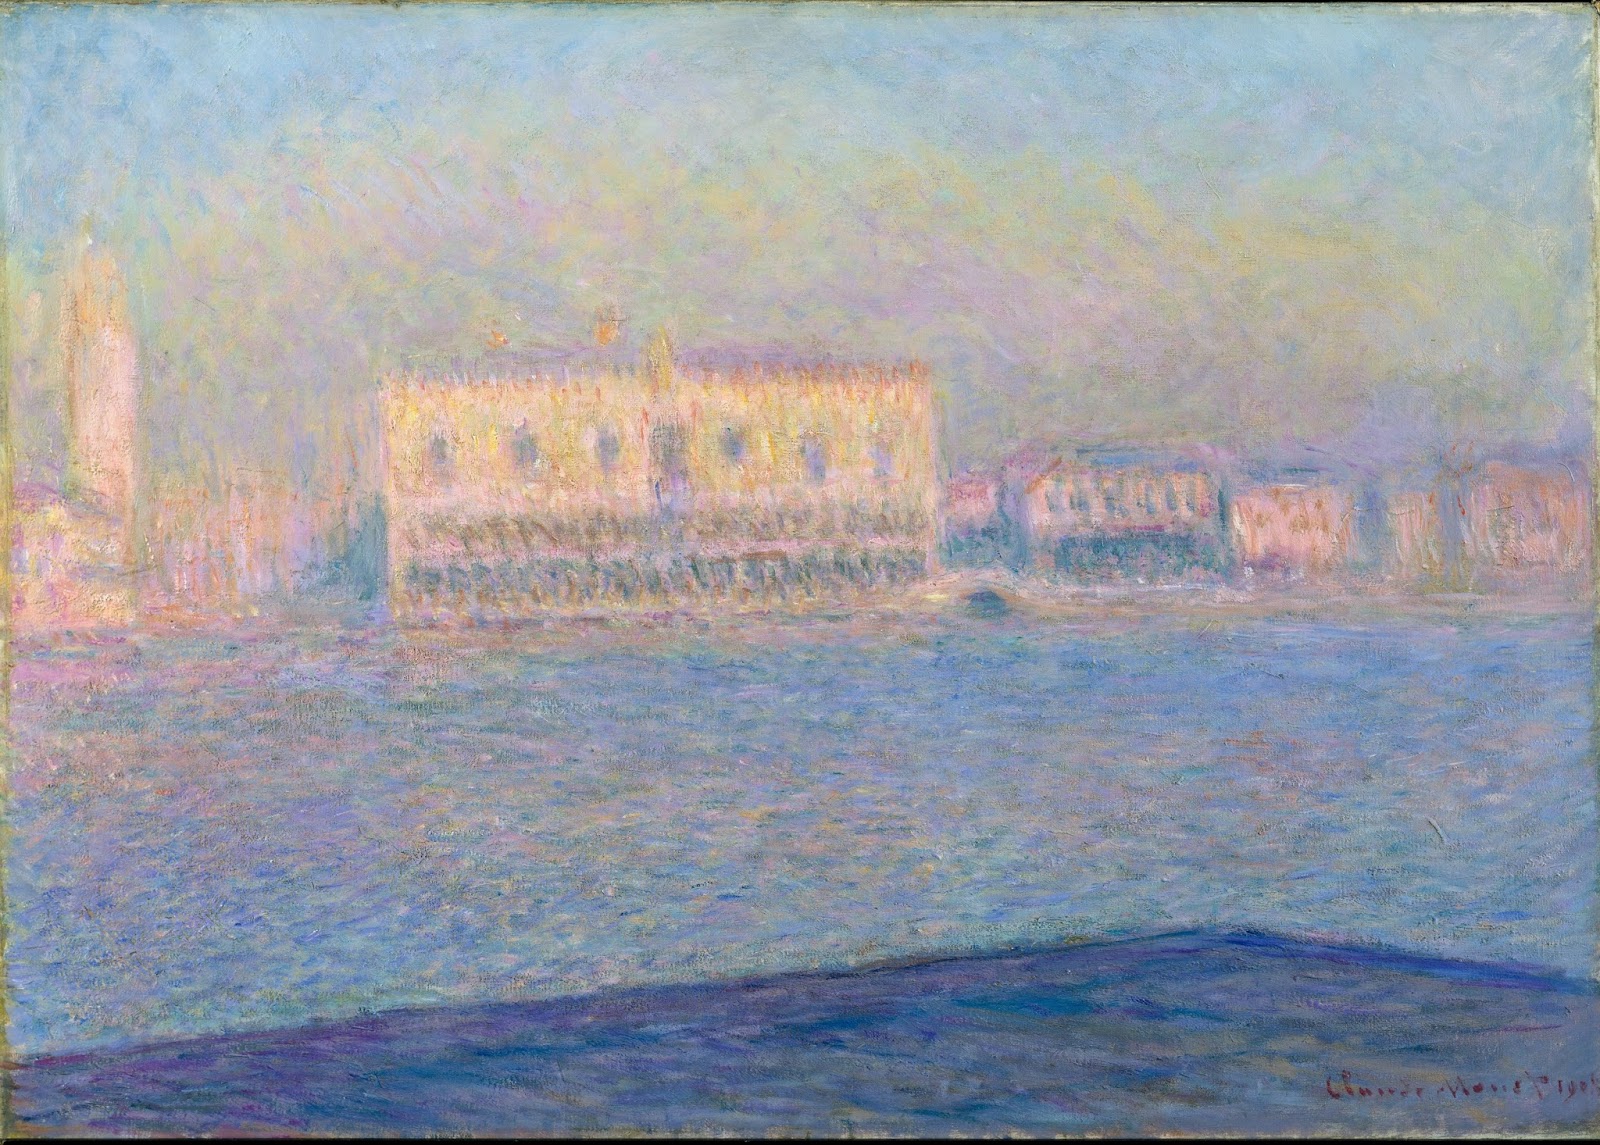 Claude+Monet-1840-1926 (447).jpg